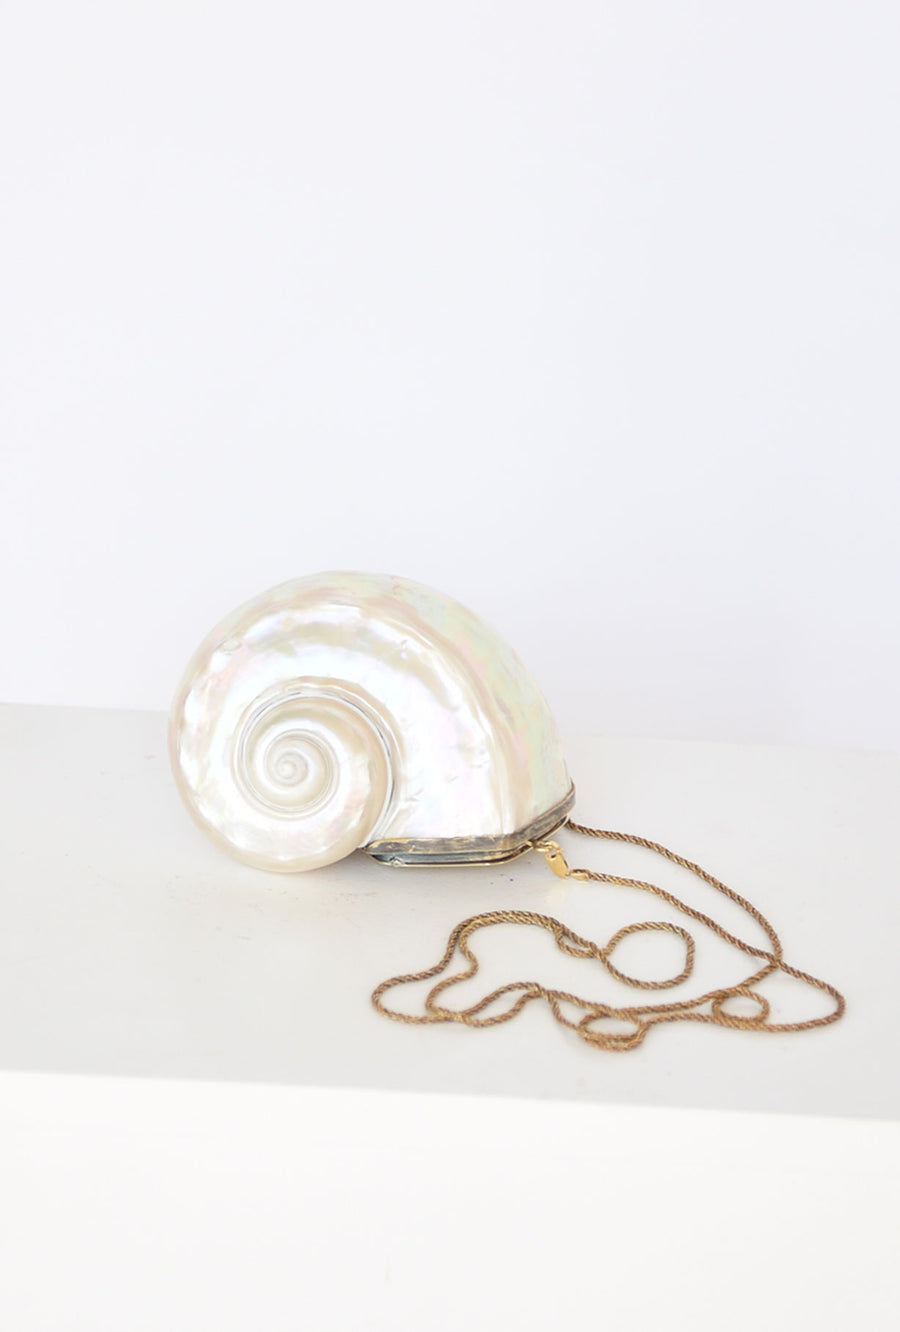 Vintage Nautilus Shell Purse